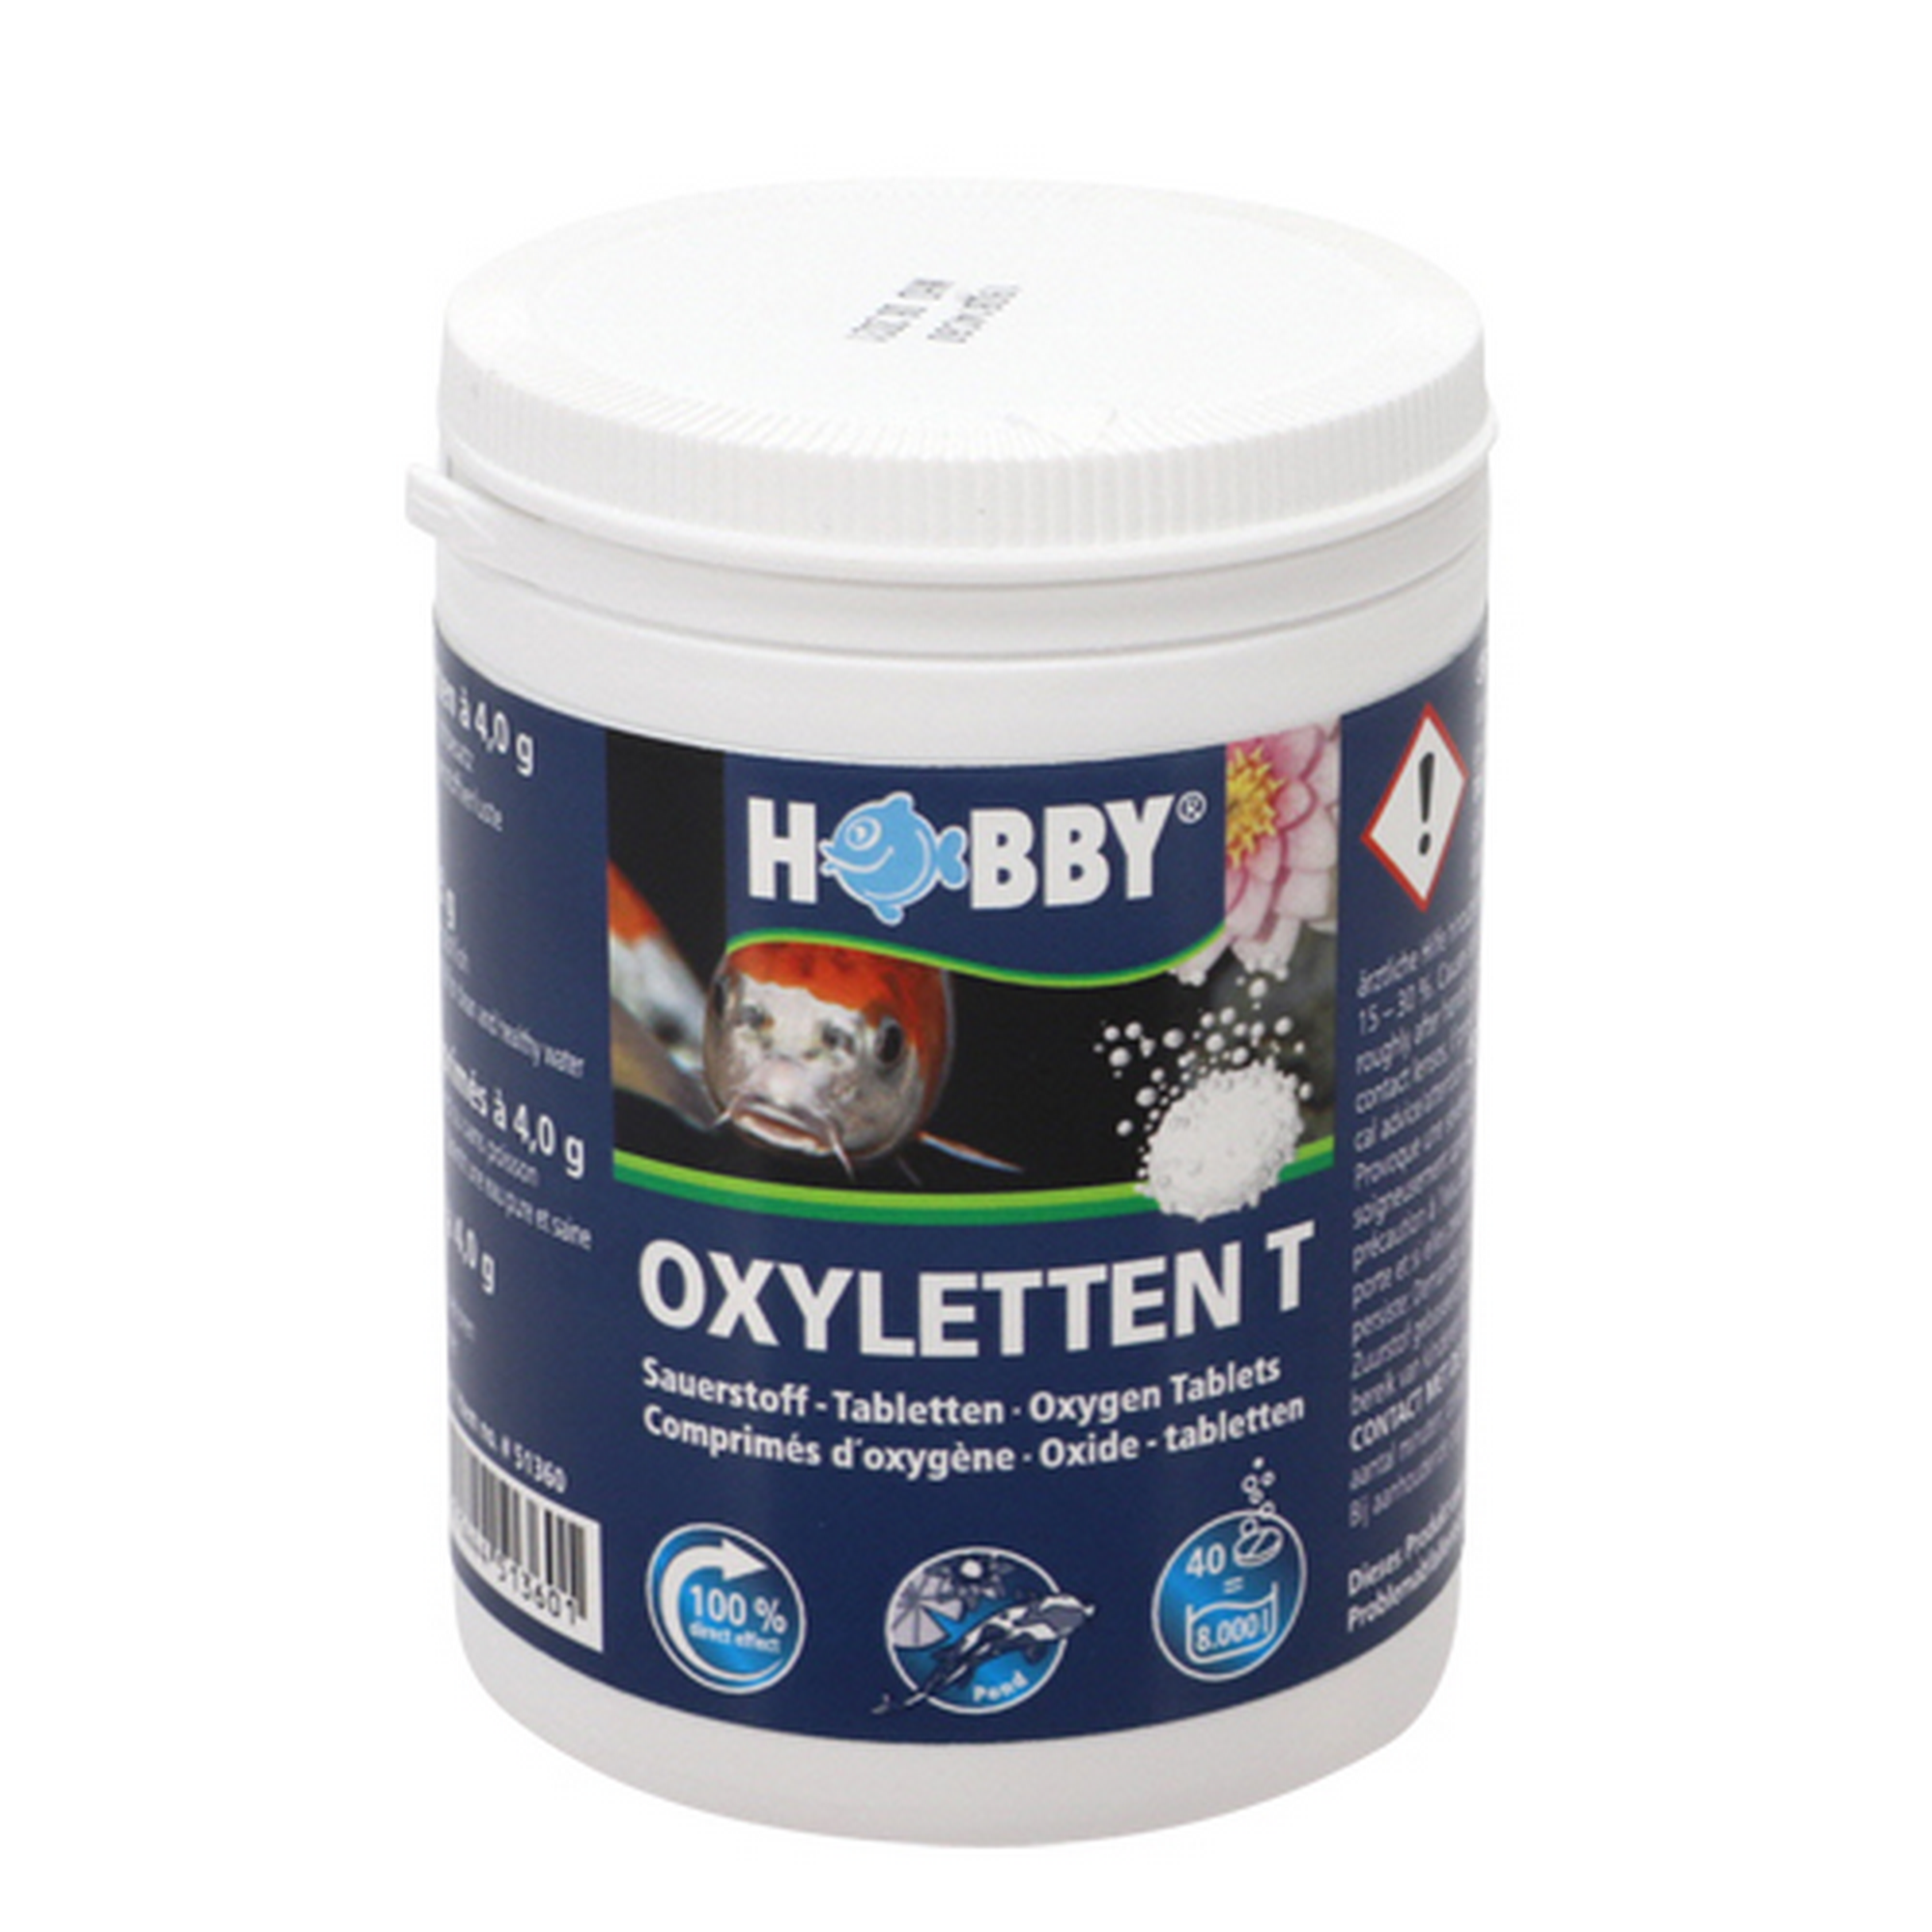 Sauerstoff-Tabletten 'Oxyletten T' 40 Stück + product picture